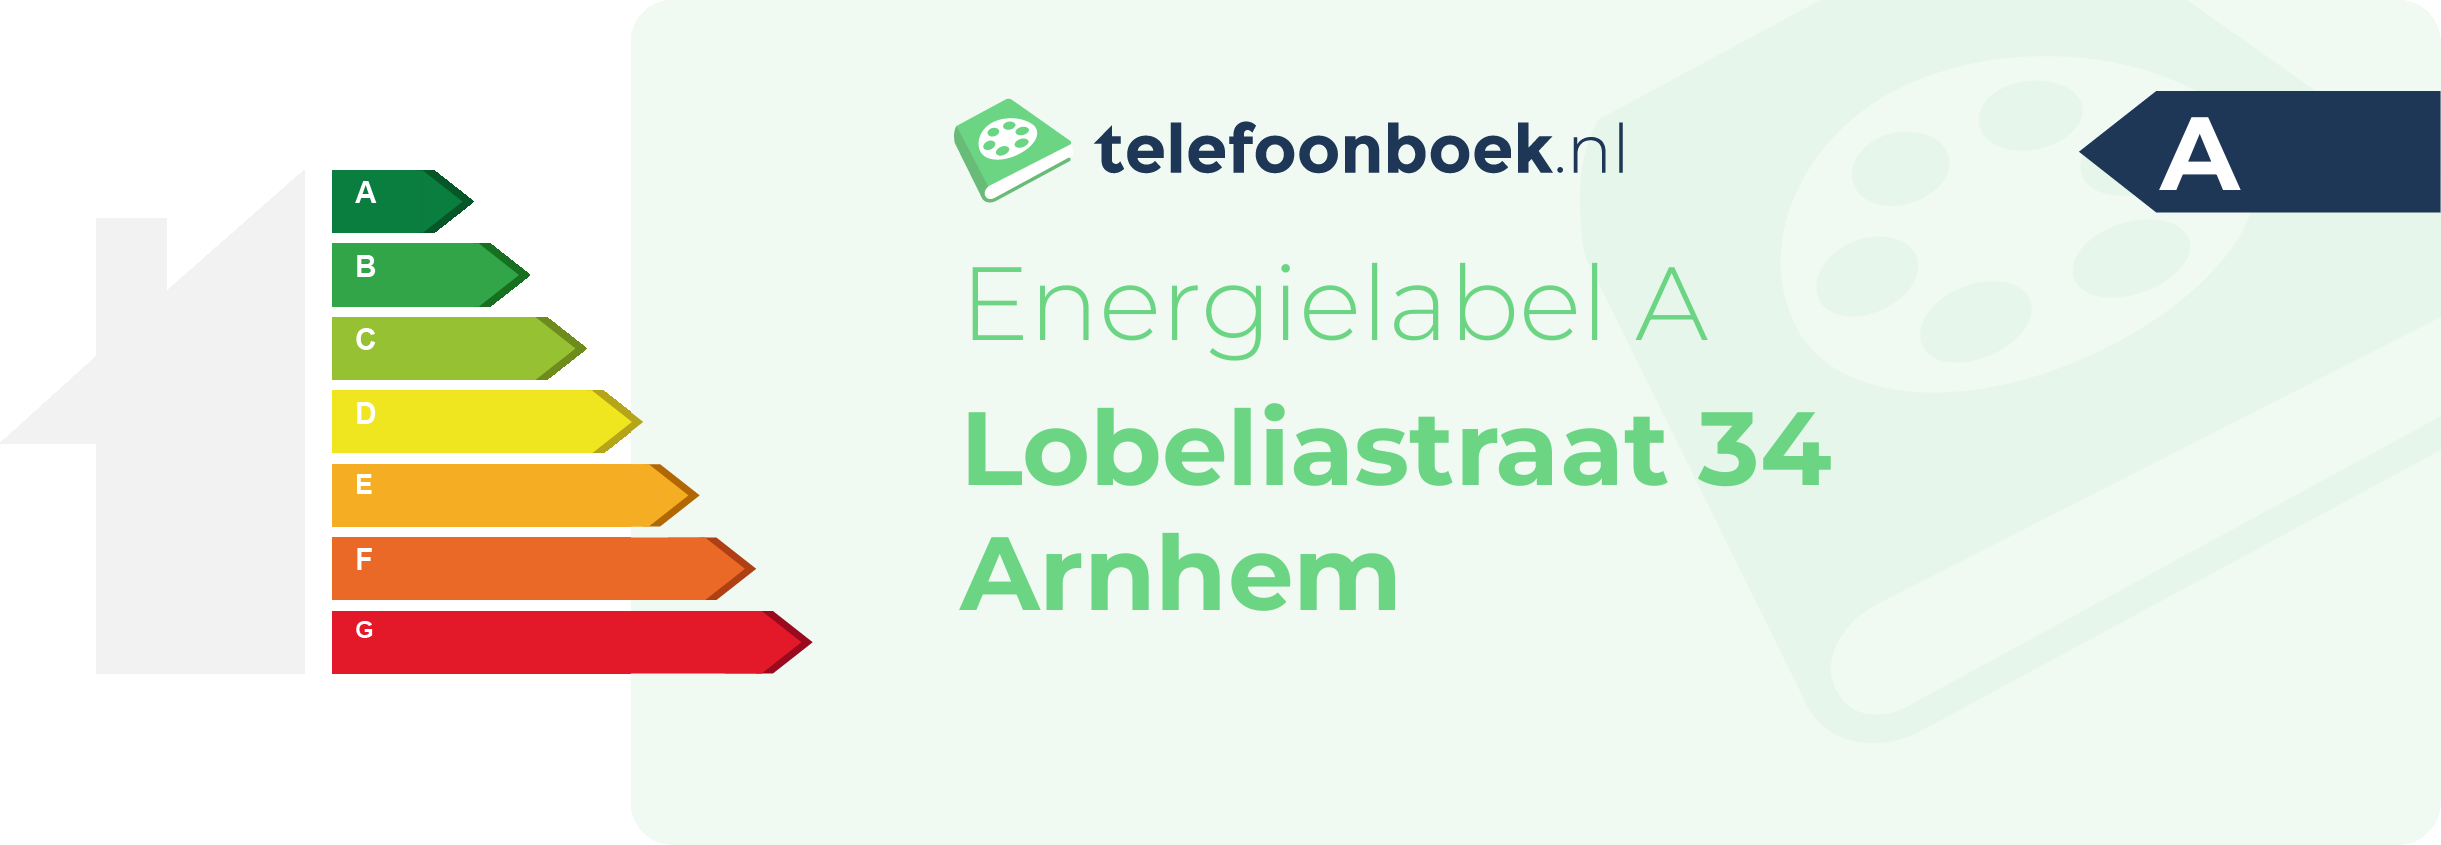 Energielabel Lobeliastraat 34 Arnhem